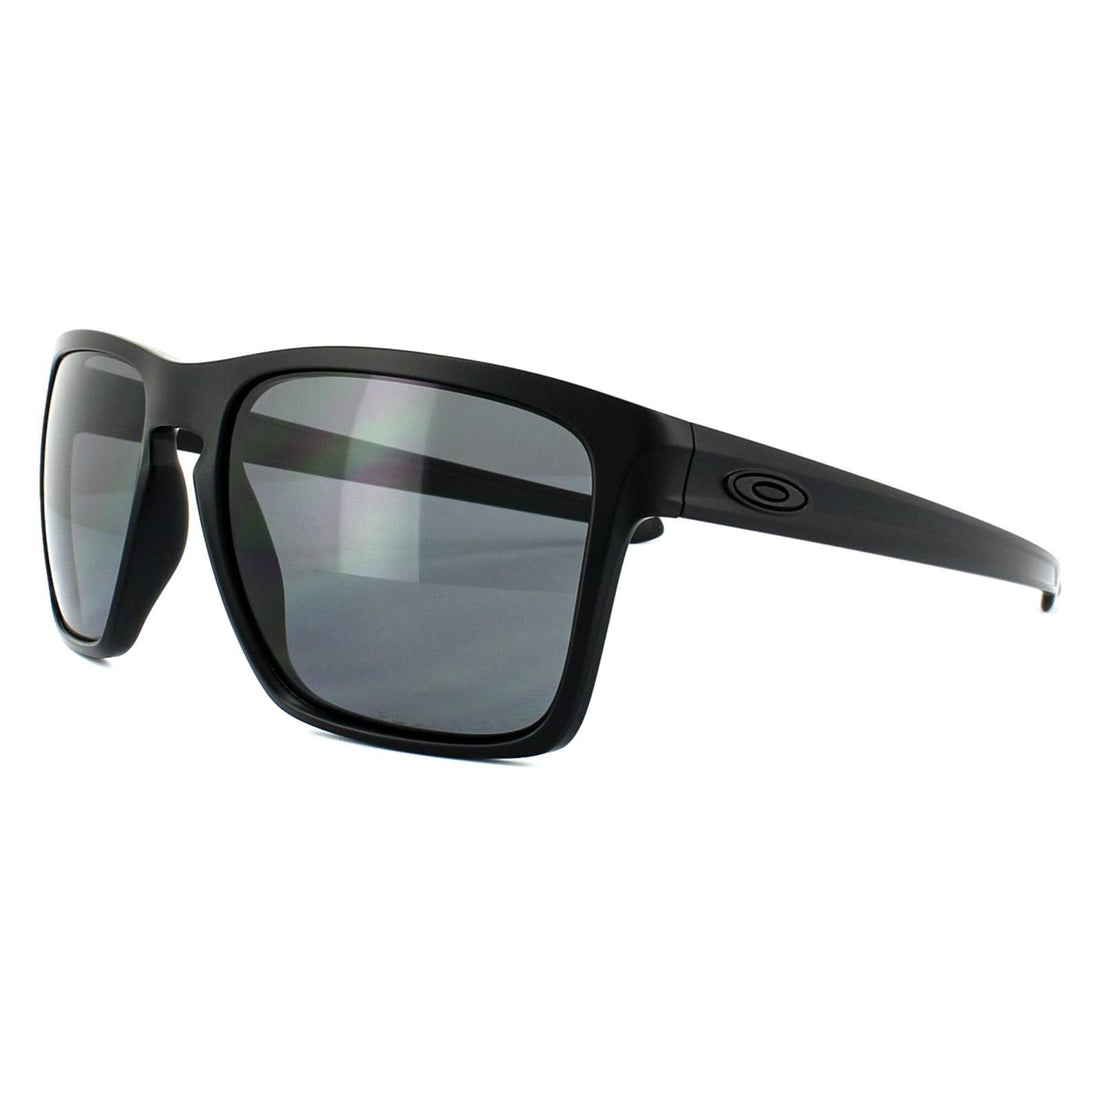 Oakley Sunglasses Sliver XL OO9341-01 Matt Black Grey Polarized